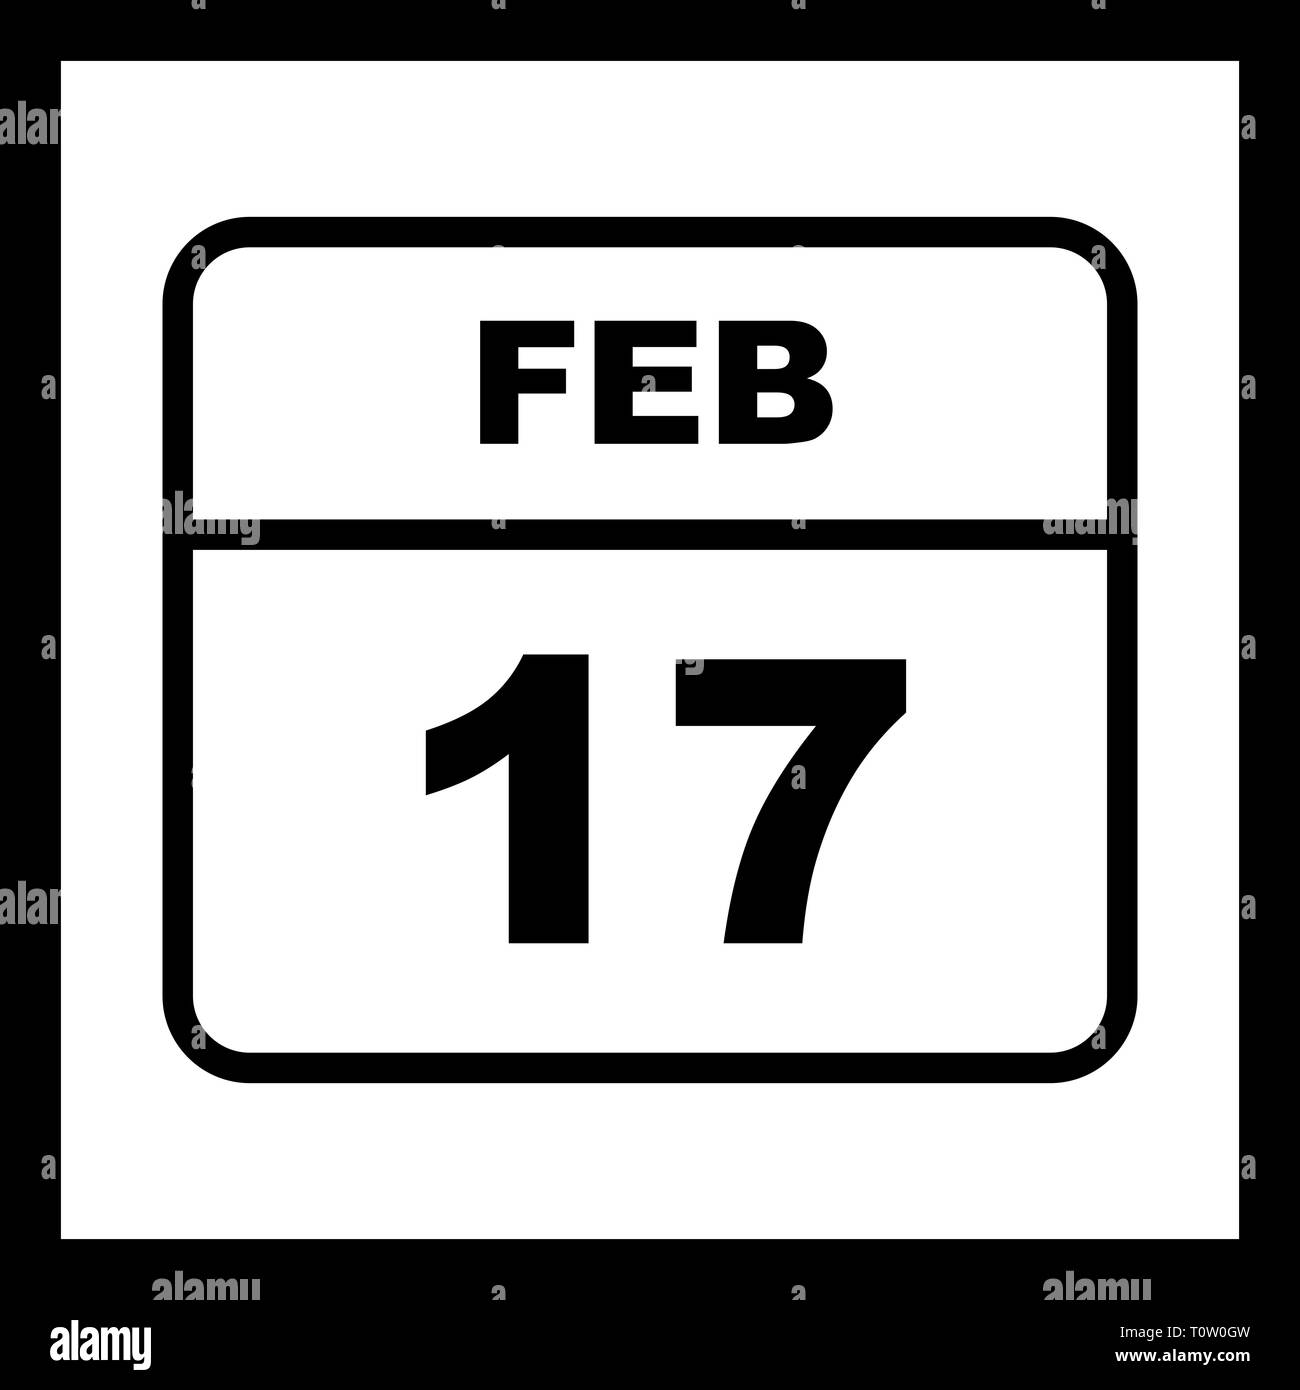 February 17th Date on a Single Day Calendar Stock Photo Alamy